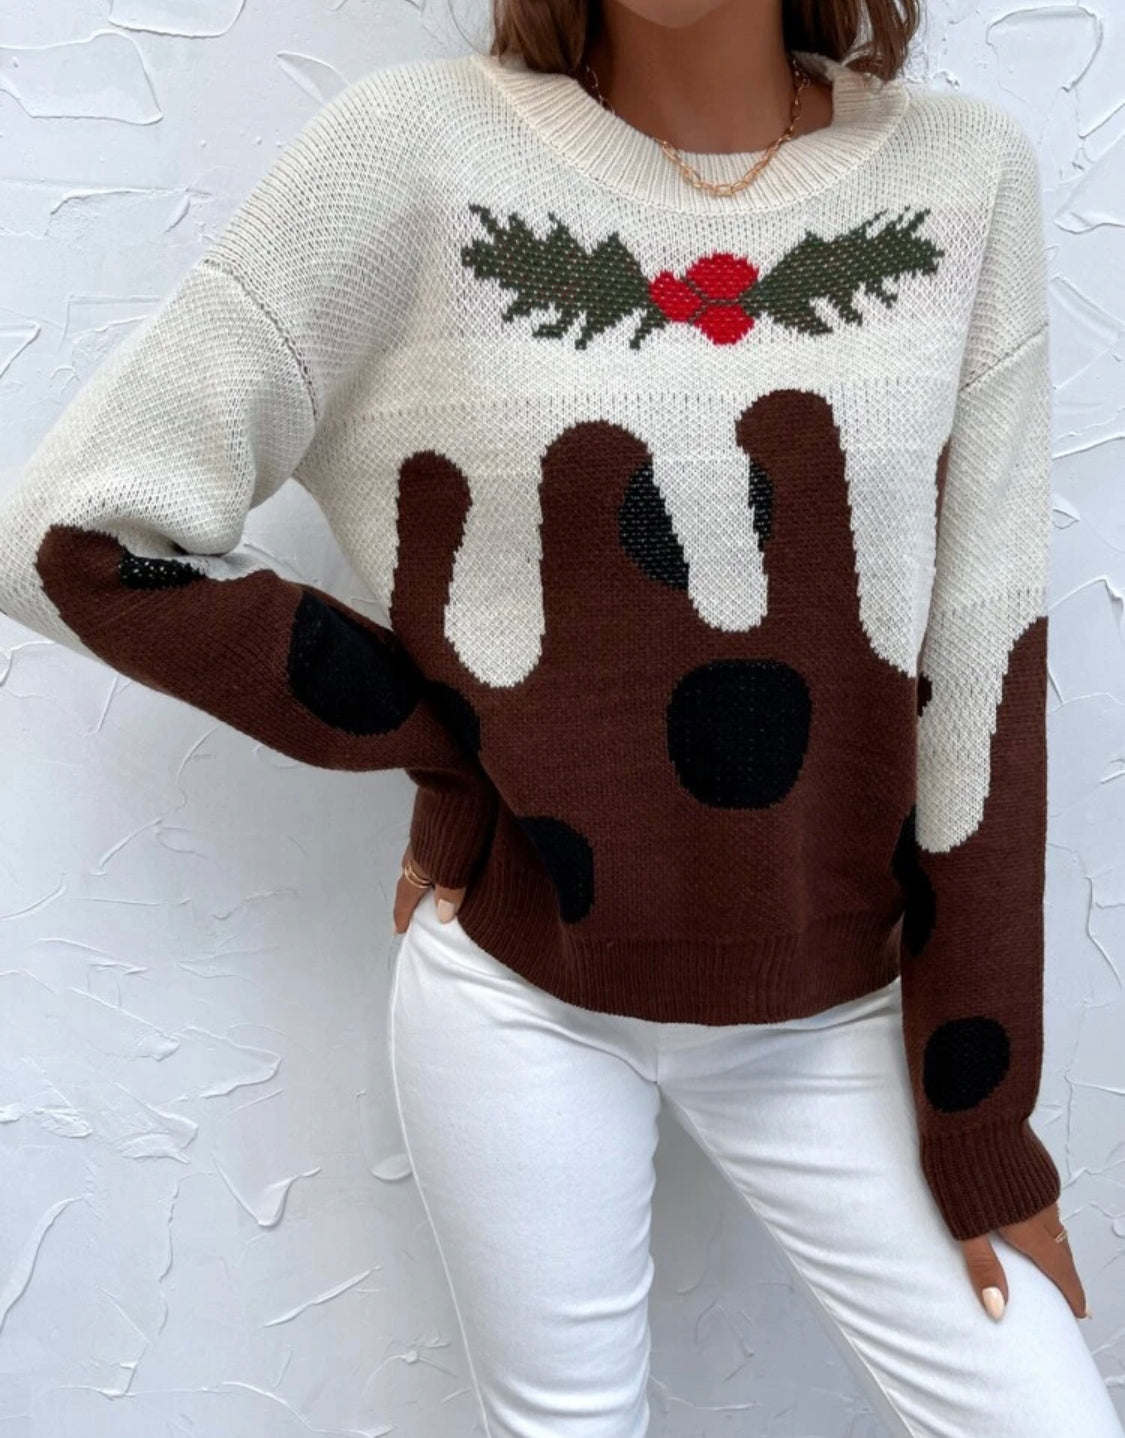 Mistletoe sweater